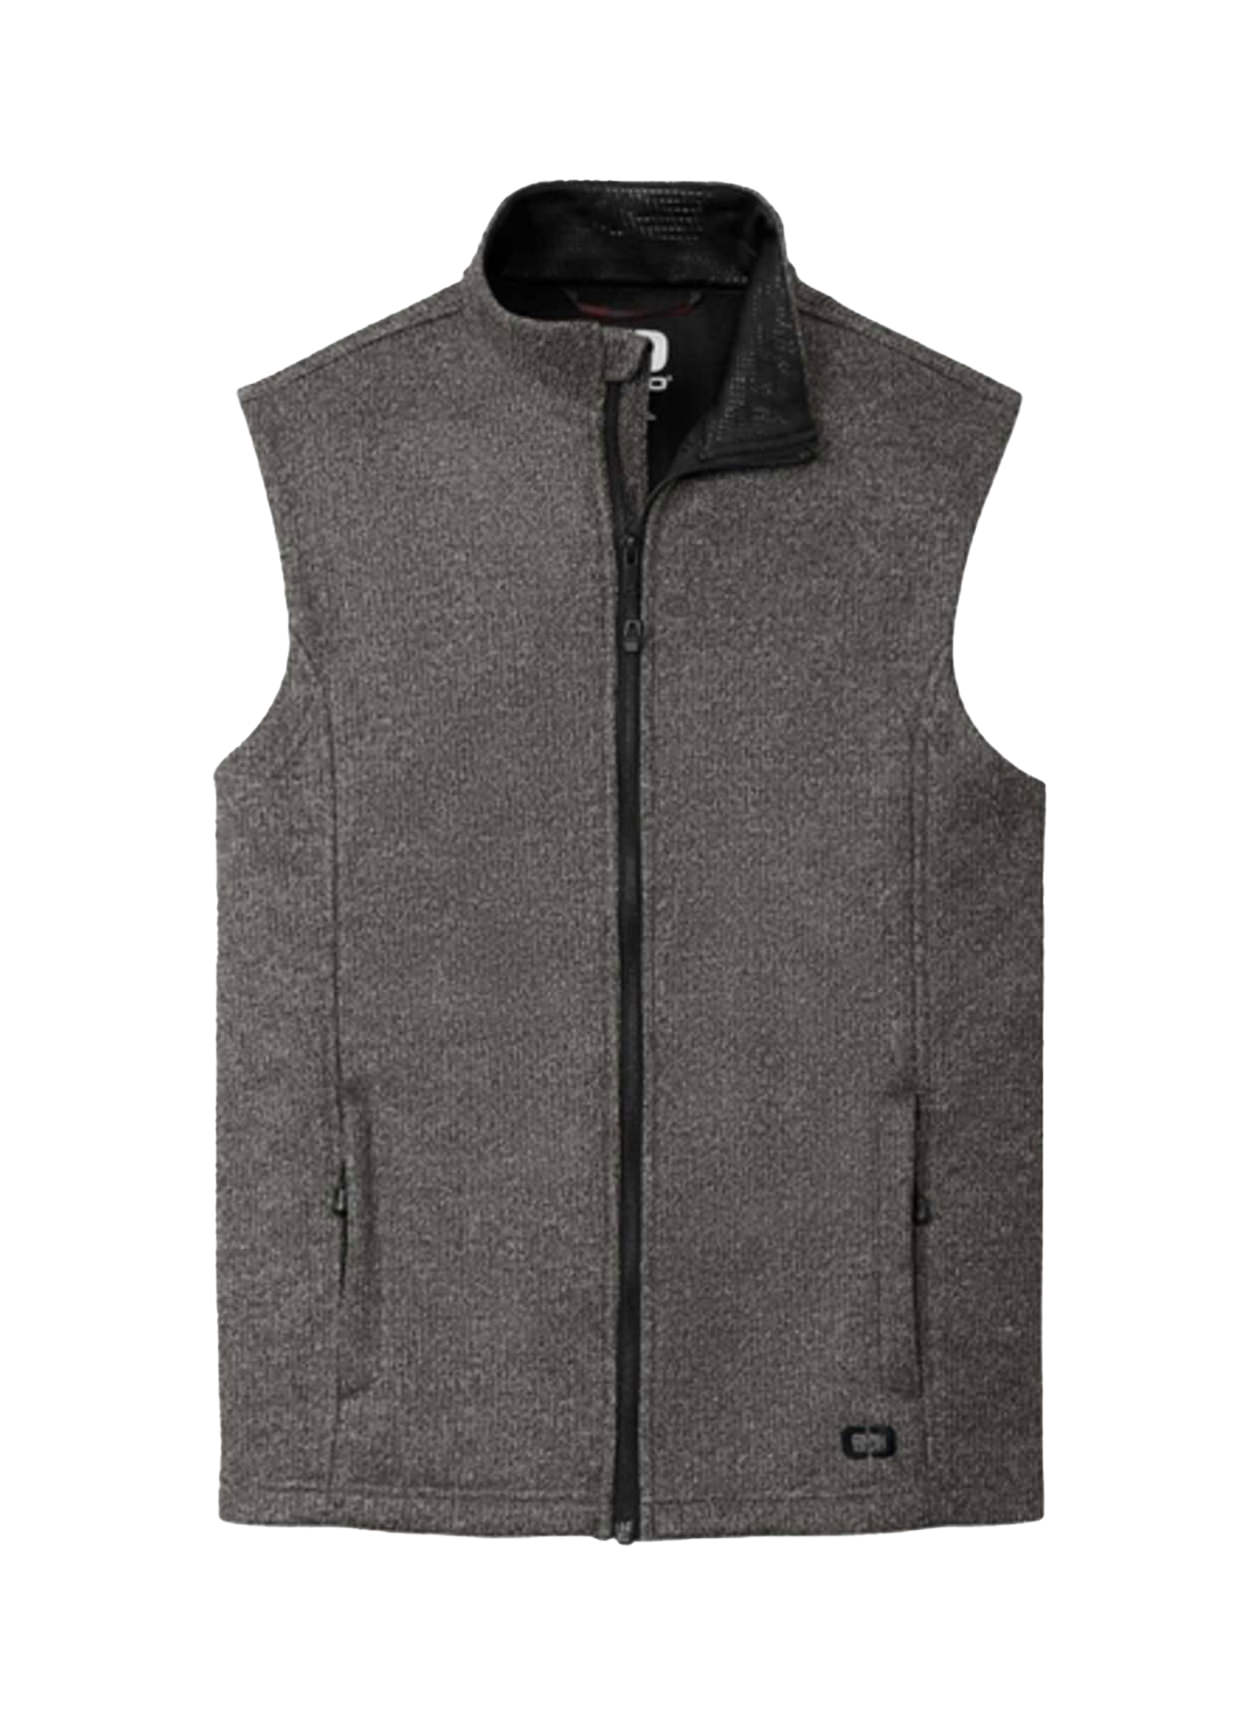 OGIO Men's Diesel Grey Heather Grit Fleece Vest | Customized Vest